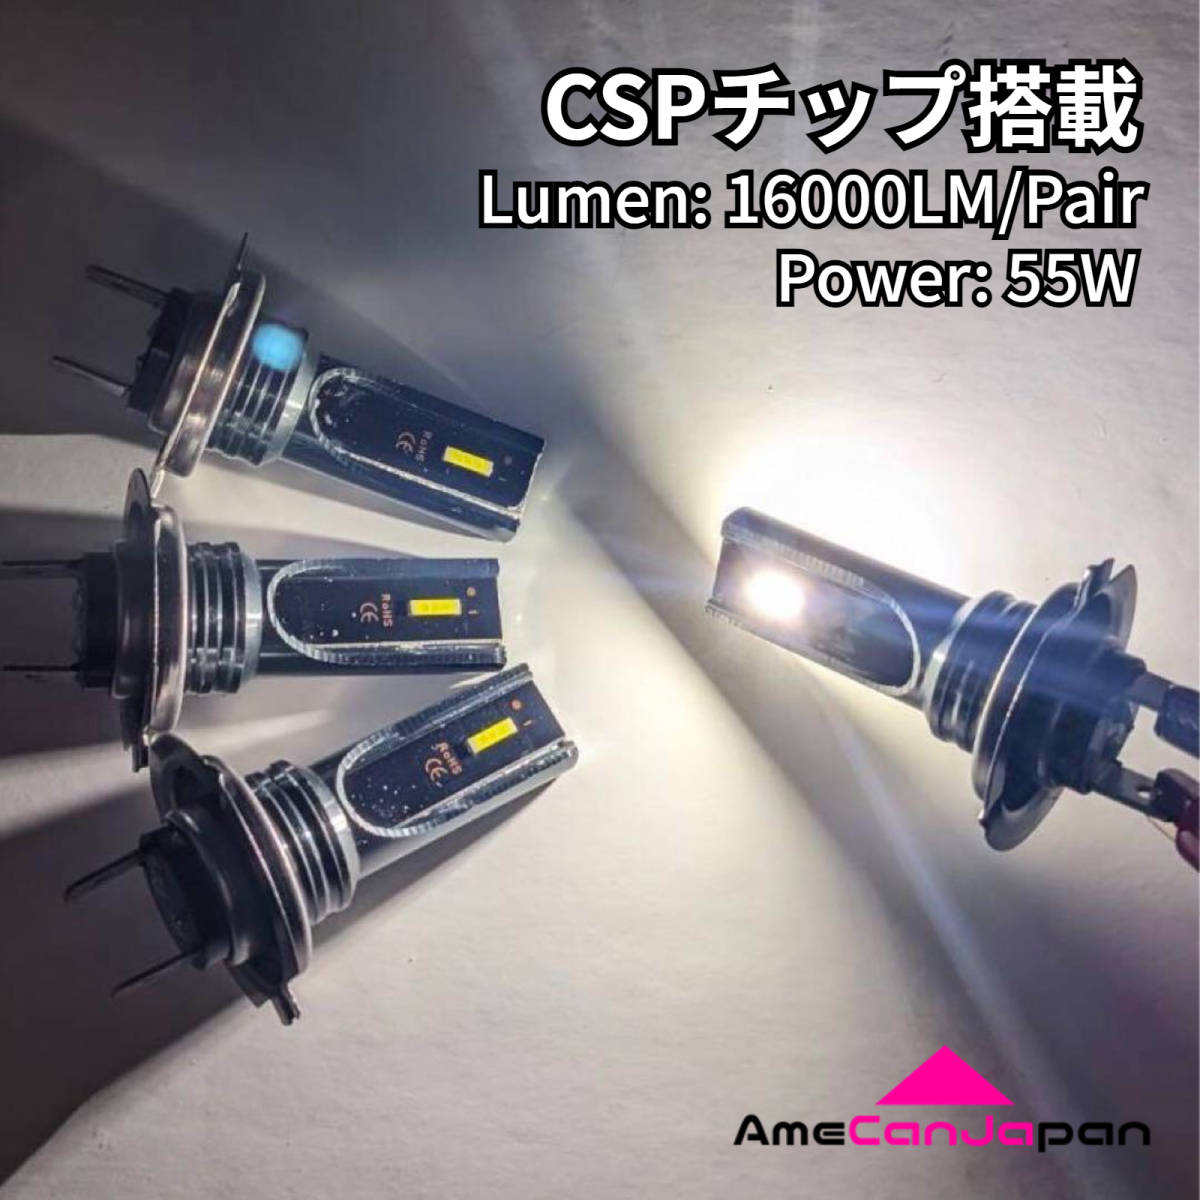 AmeCanJapan HONDA CBR125 JC39A 適合 H7 LED ヘッドライト バイク用 Hi LOW ホワイト 2灯 爆光 CSPチップ搭載_画像4